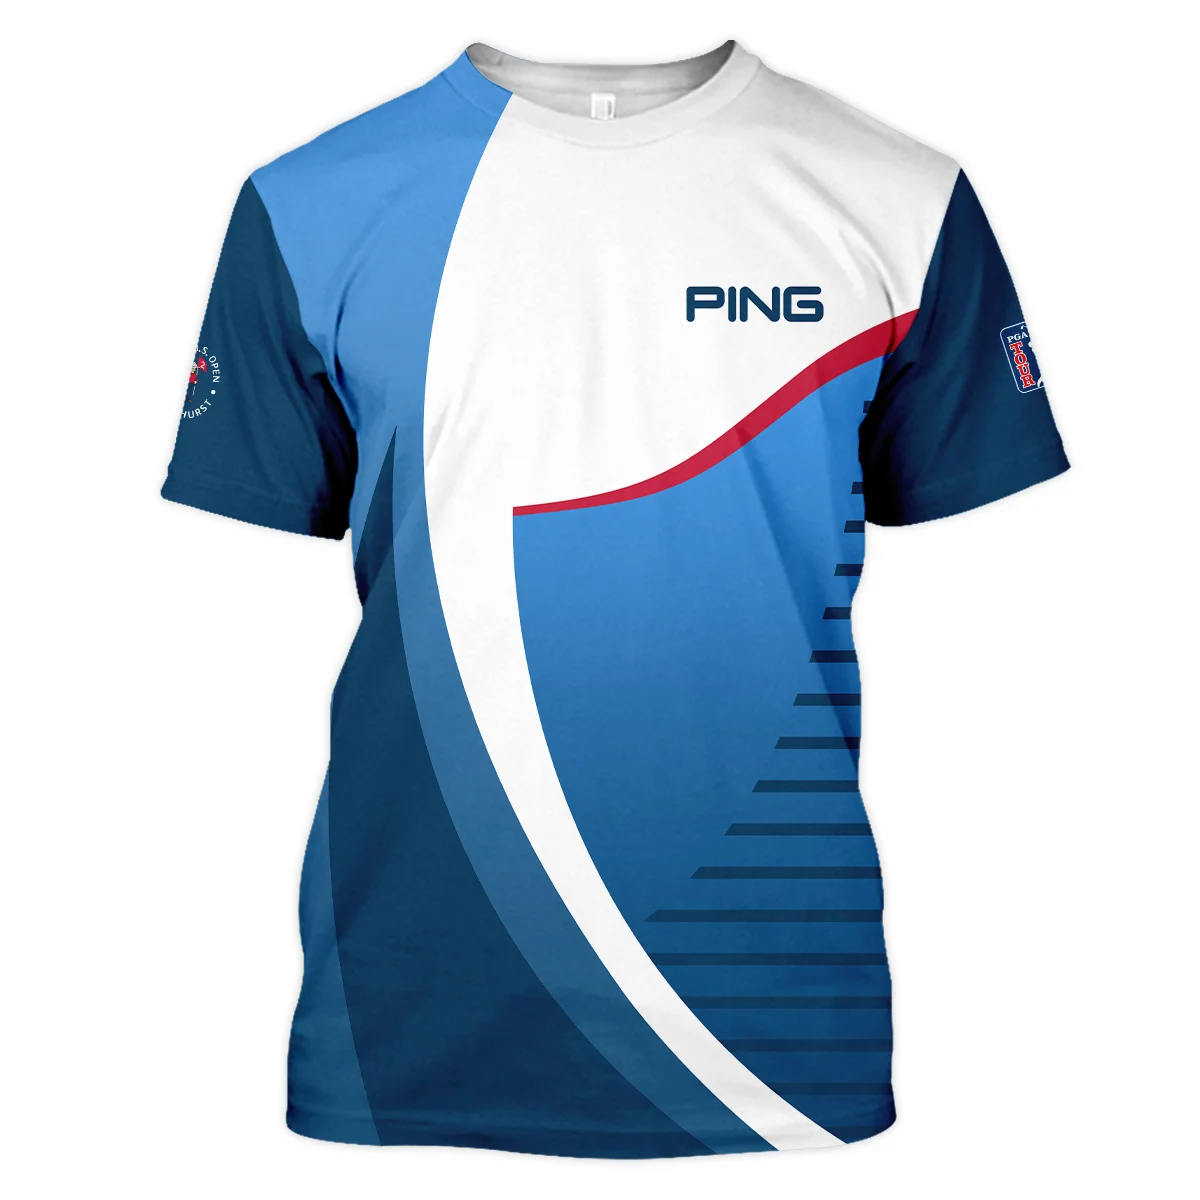 124th U.S. Open Pinehurst Golf Sport Ping Unisex T-Shirt Blue Gradient Red Straight T-Shirt